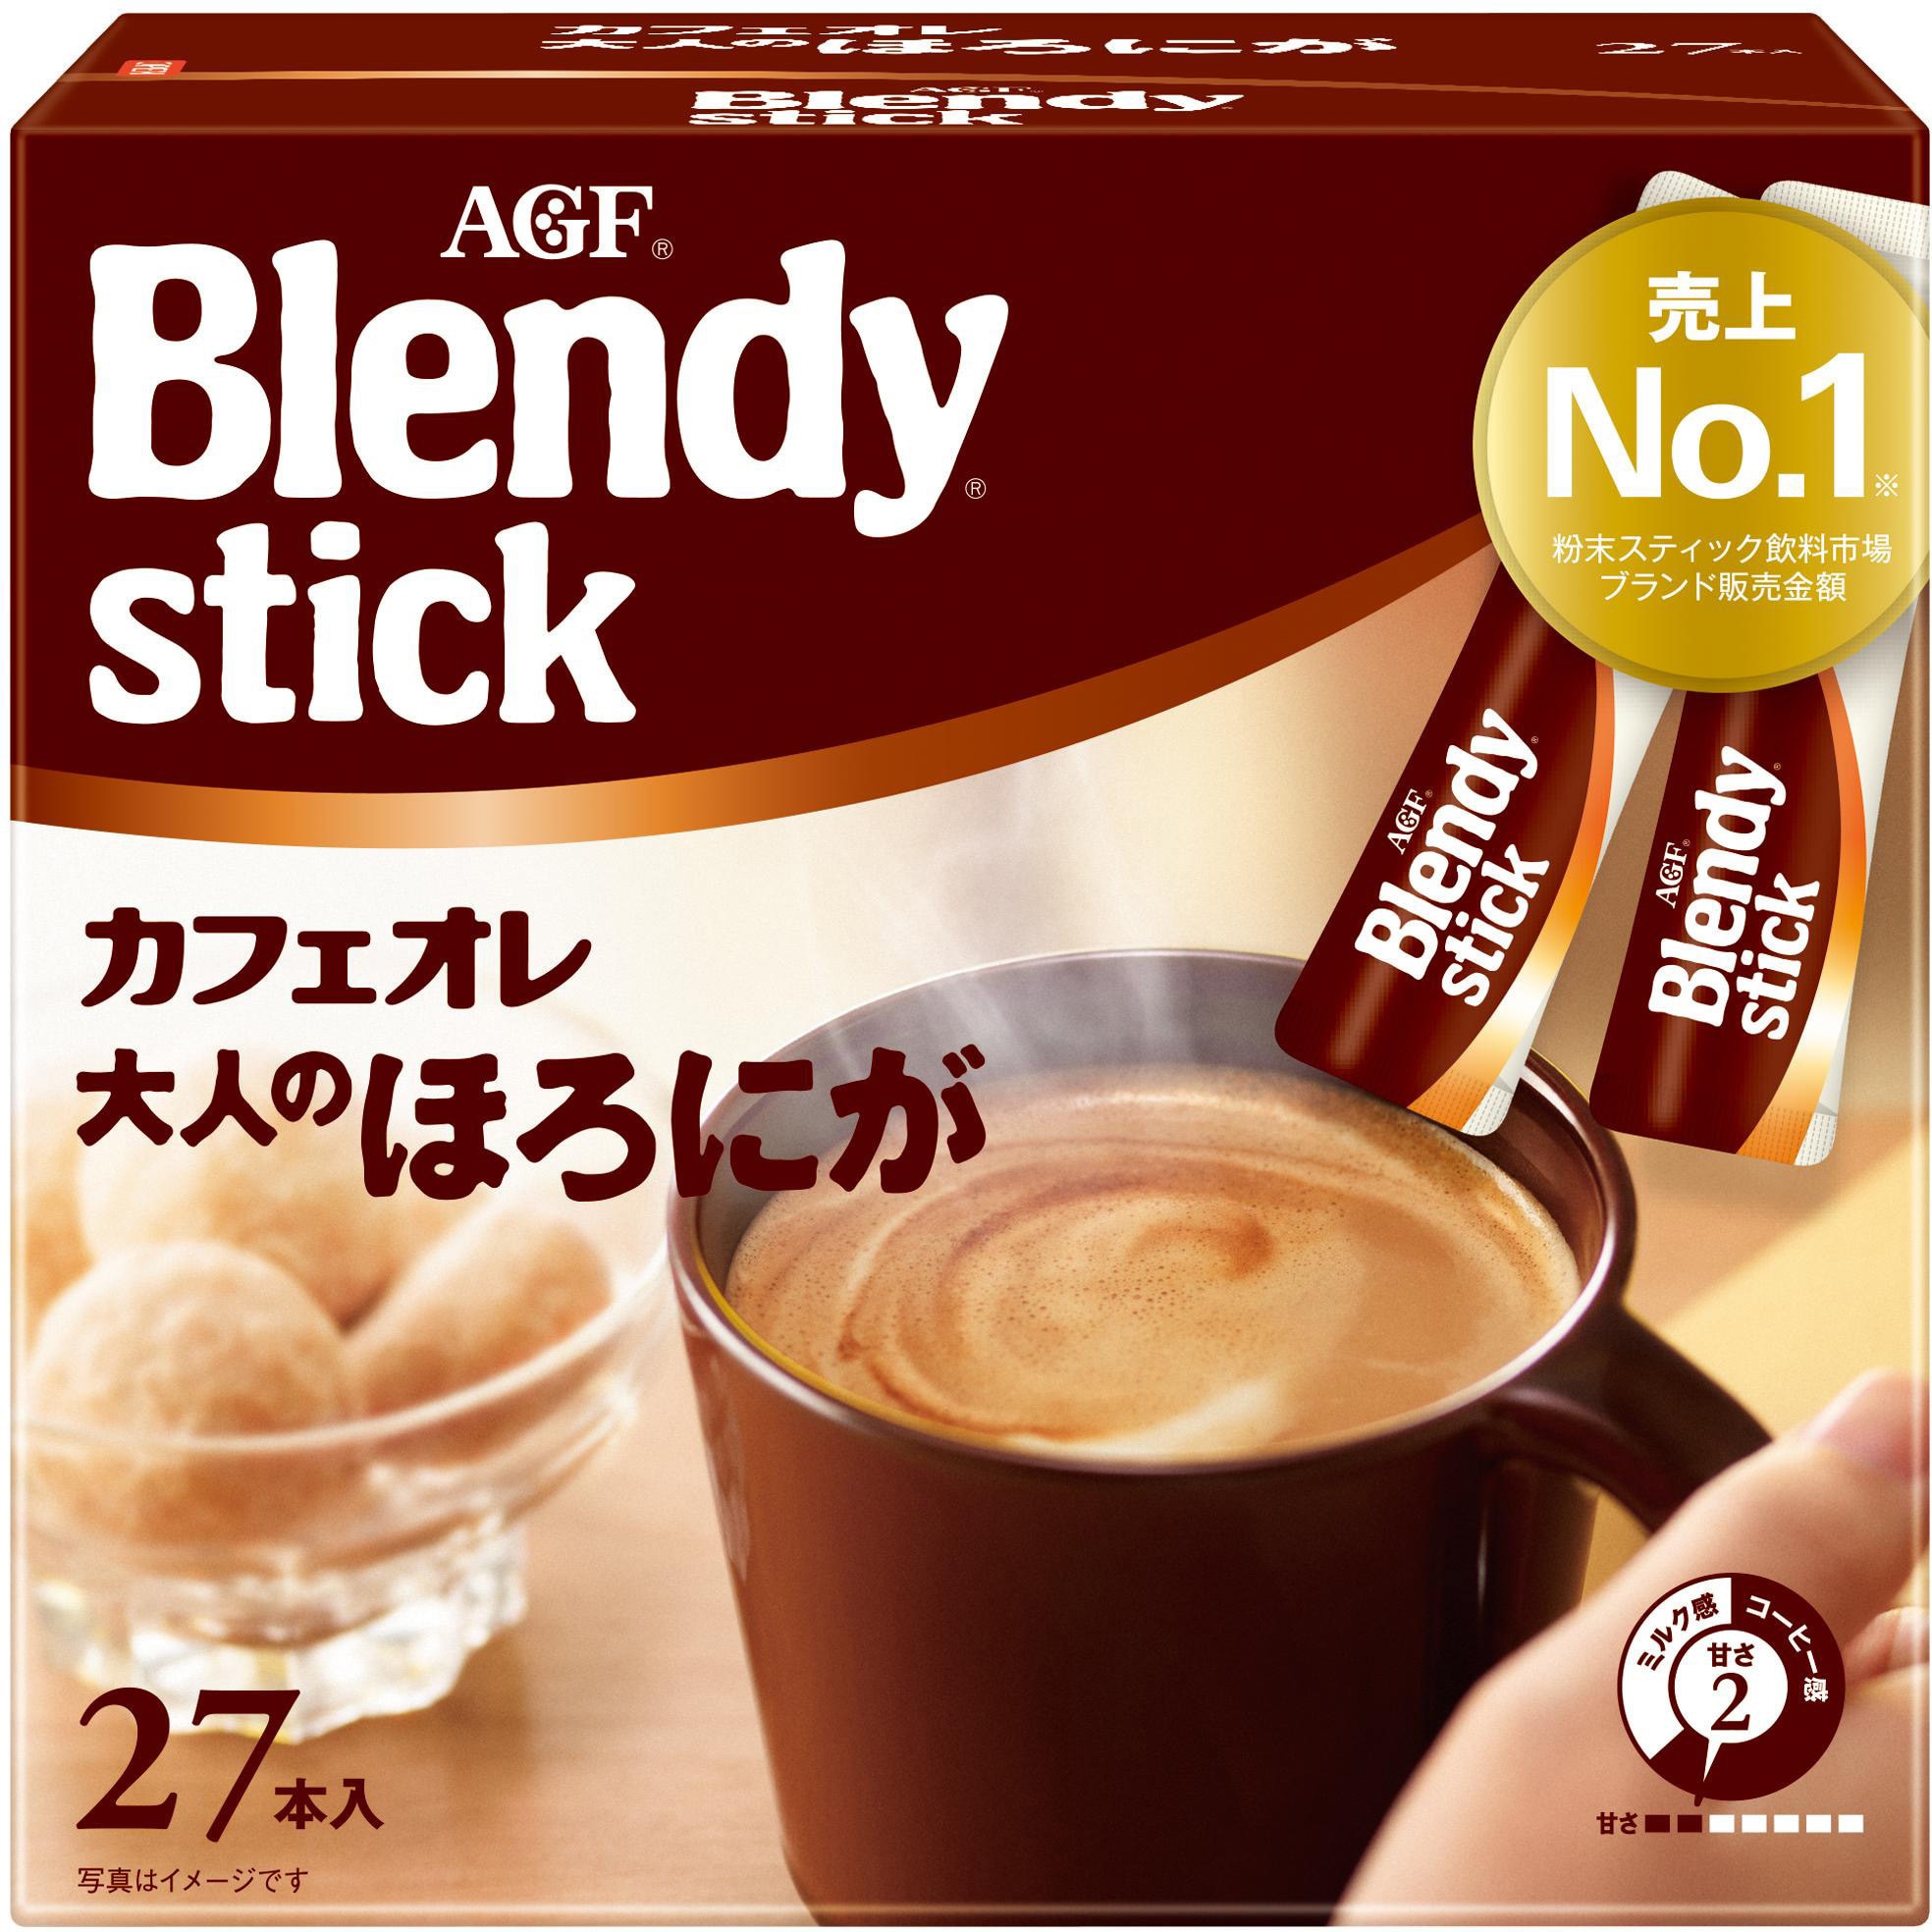 AGF マリーム スティック 100本 - コーヒー用ミルク